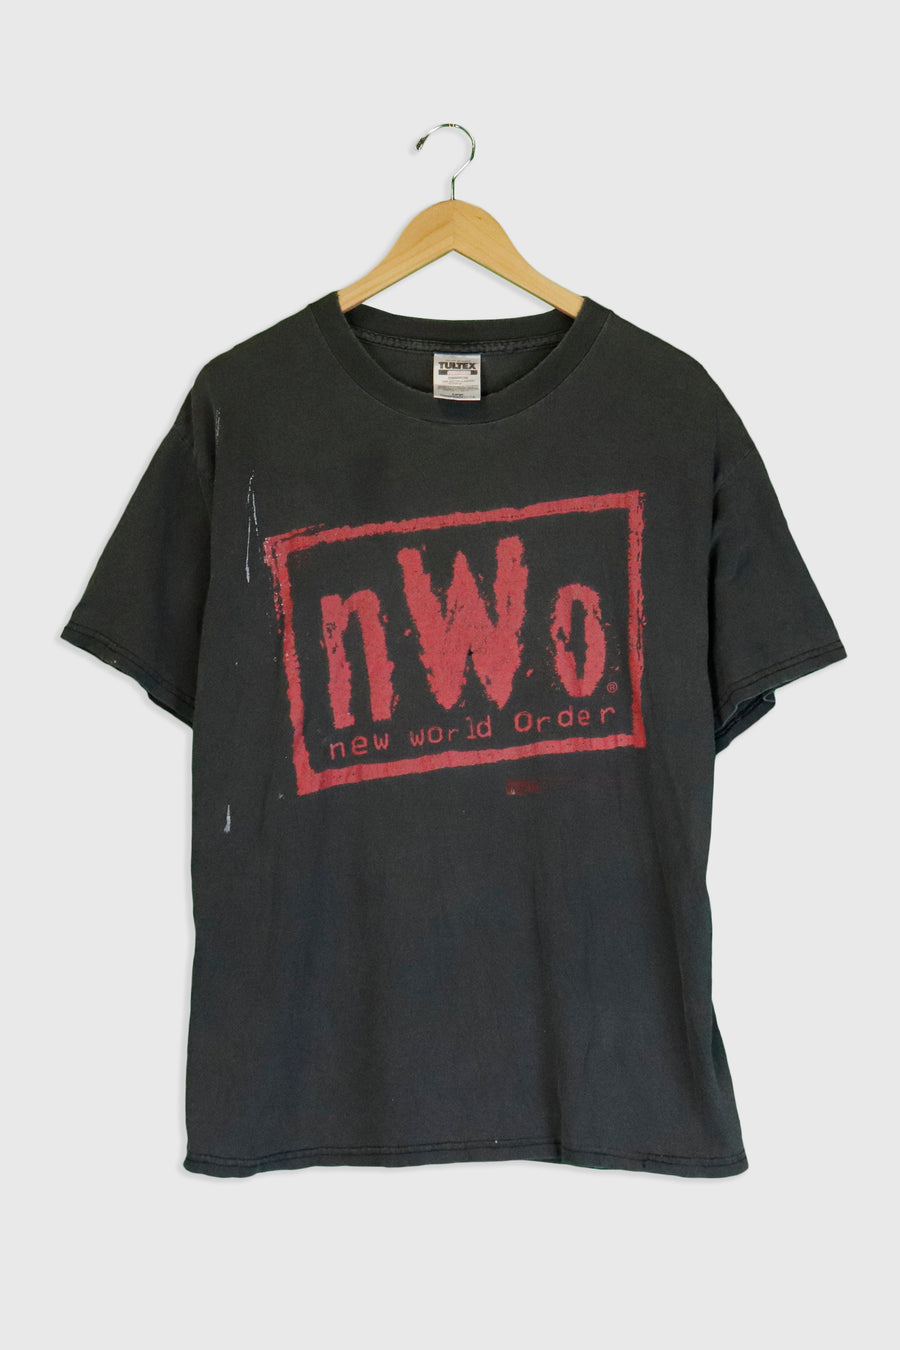 Vintage NWO Bad Has Arrived T Shirt Sz L